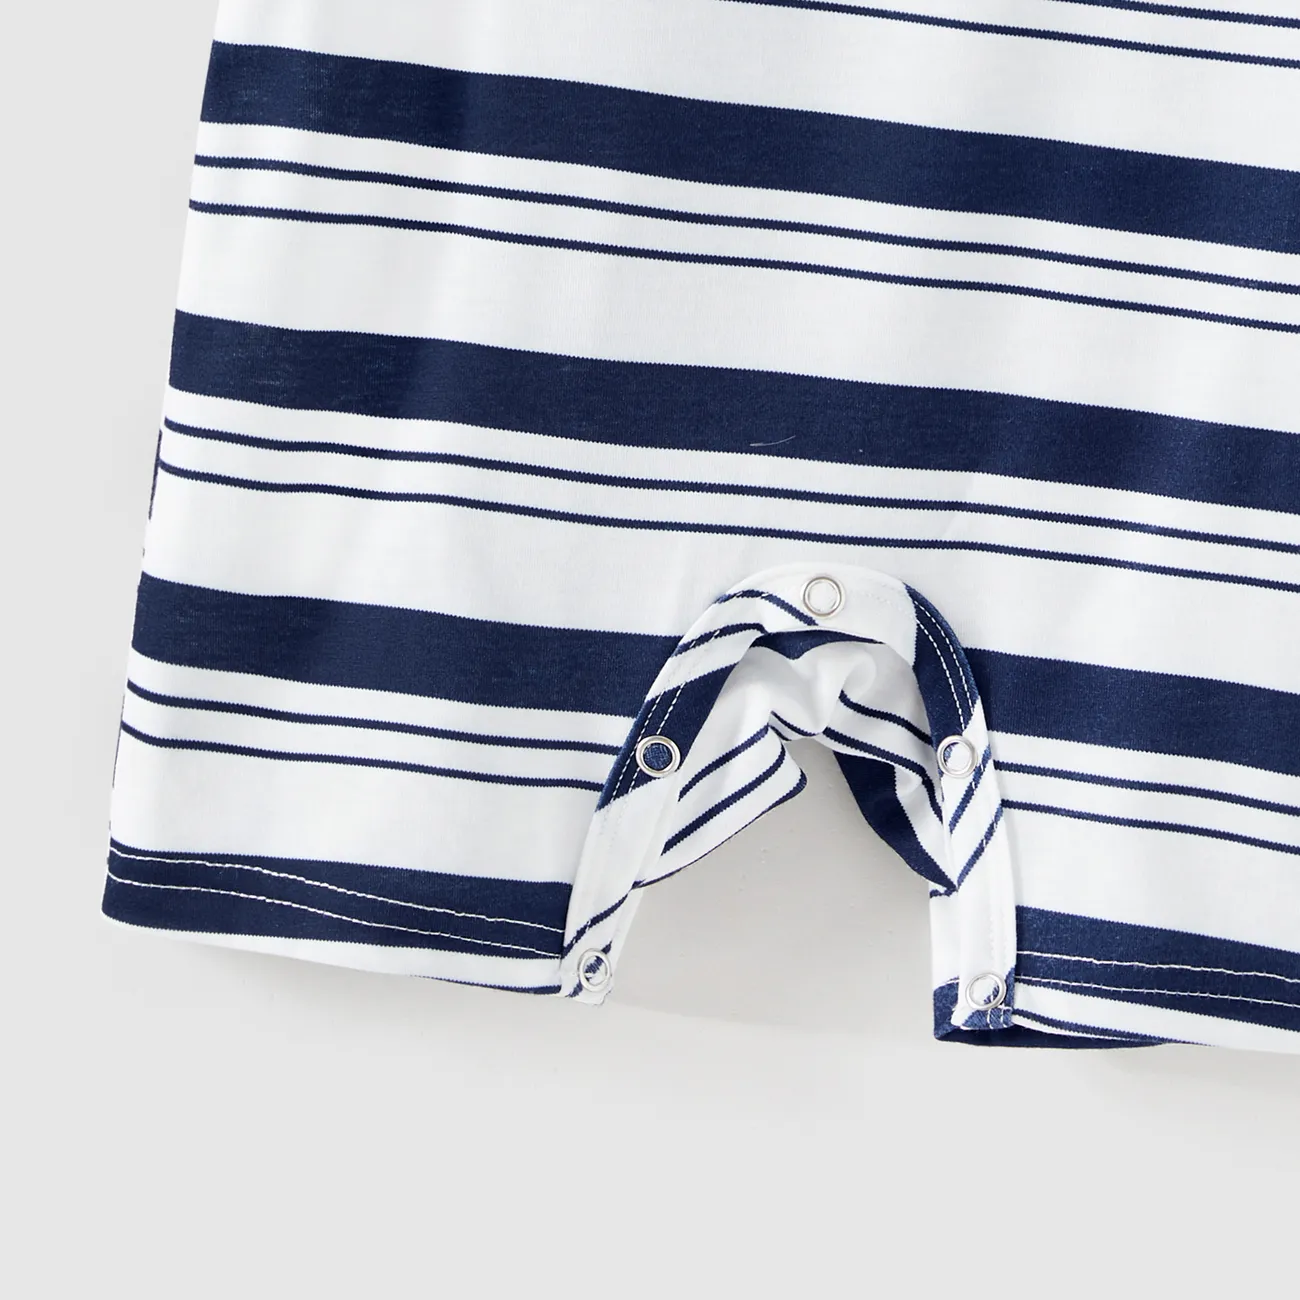 Family Matching Cotton Short-sleeve Spliced Chevron Pattern Dresses and Striped Polo Shirts Sets blueblack big image 1